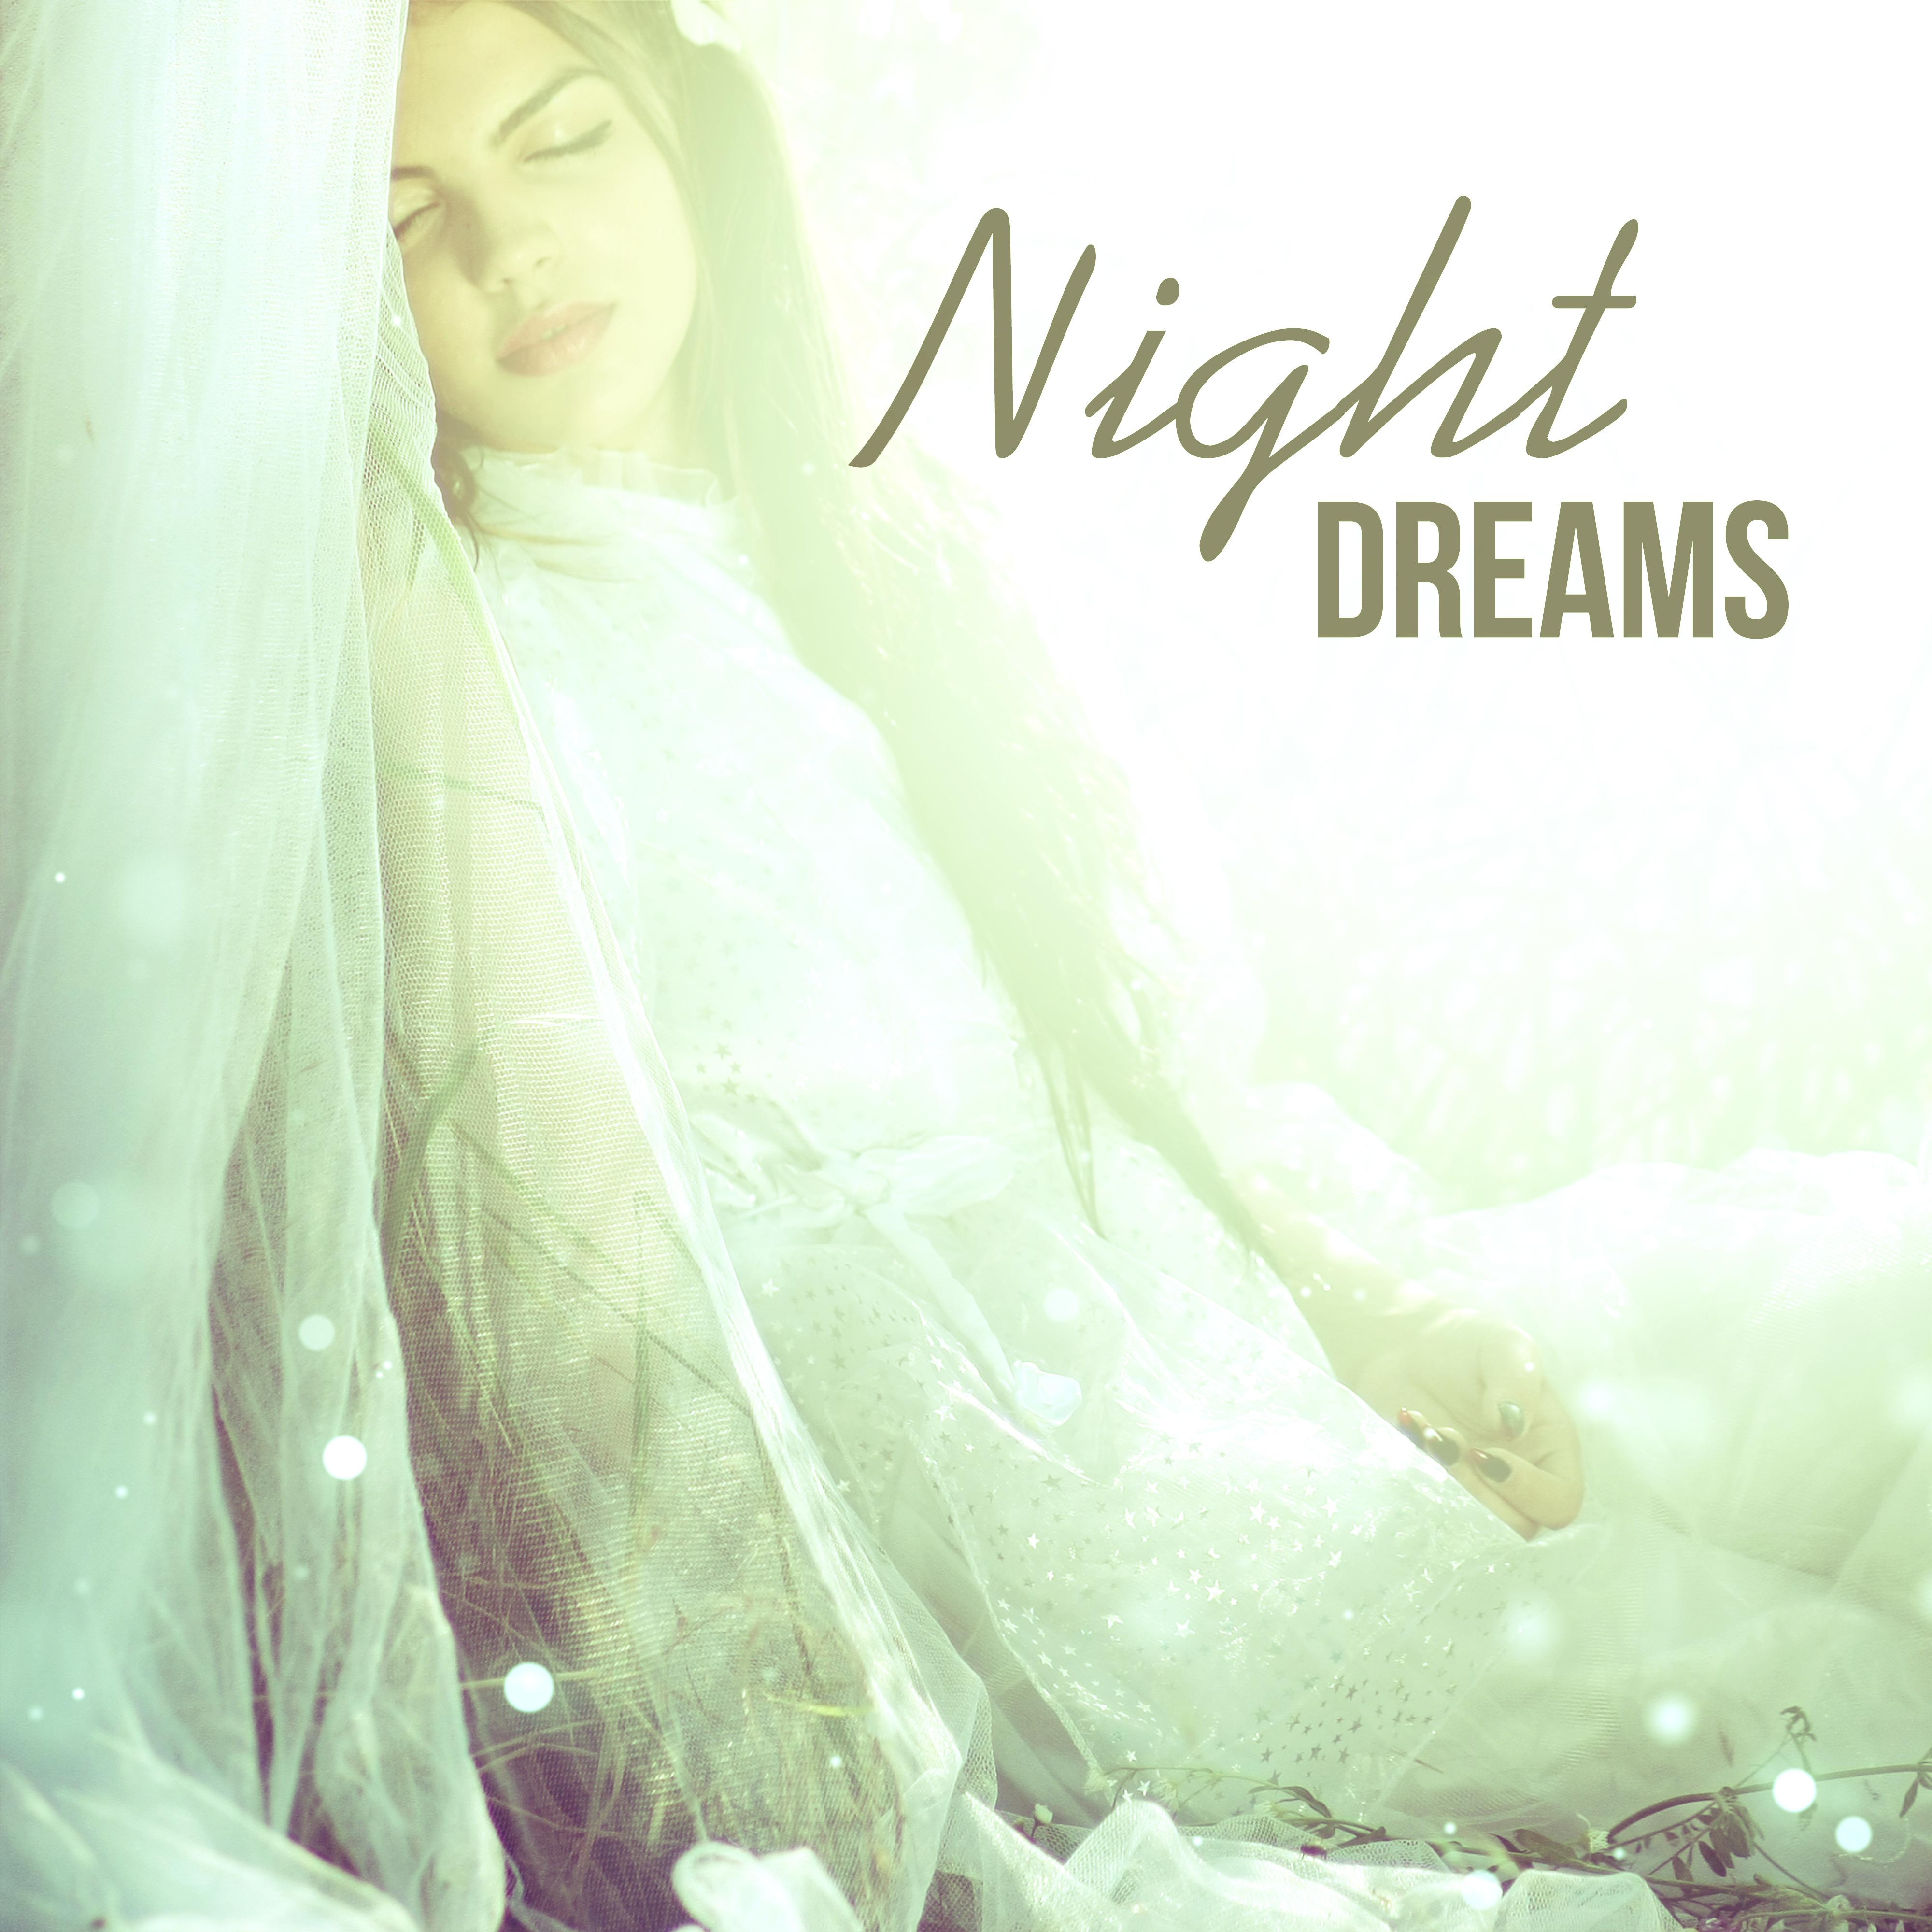 Night Dreams - Diamond Stars, Full Moon, charming melody to Sleep, Warm Bed, Rest for Body, Night Restart